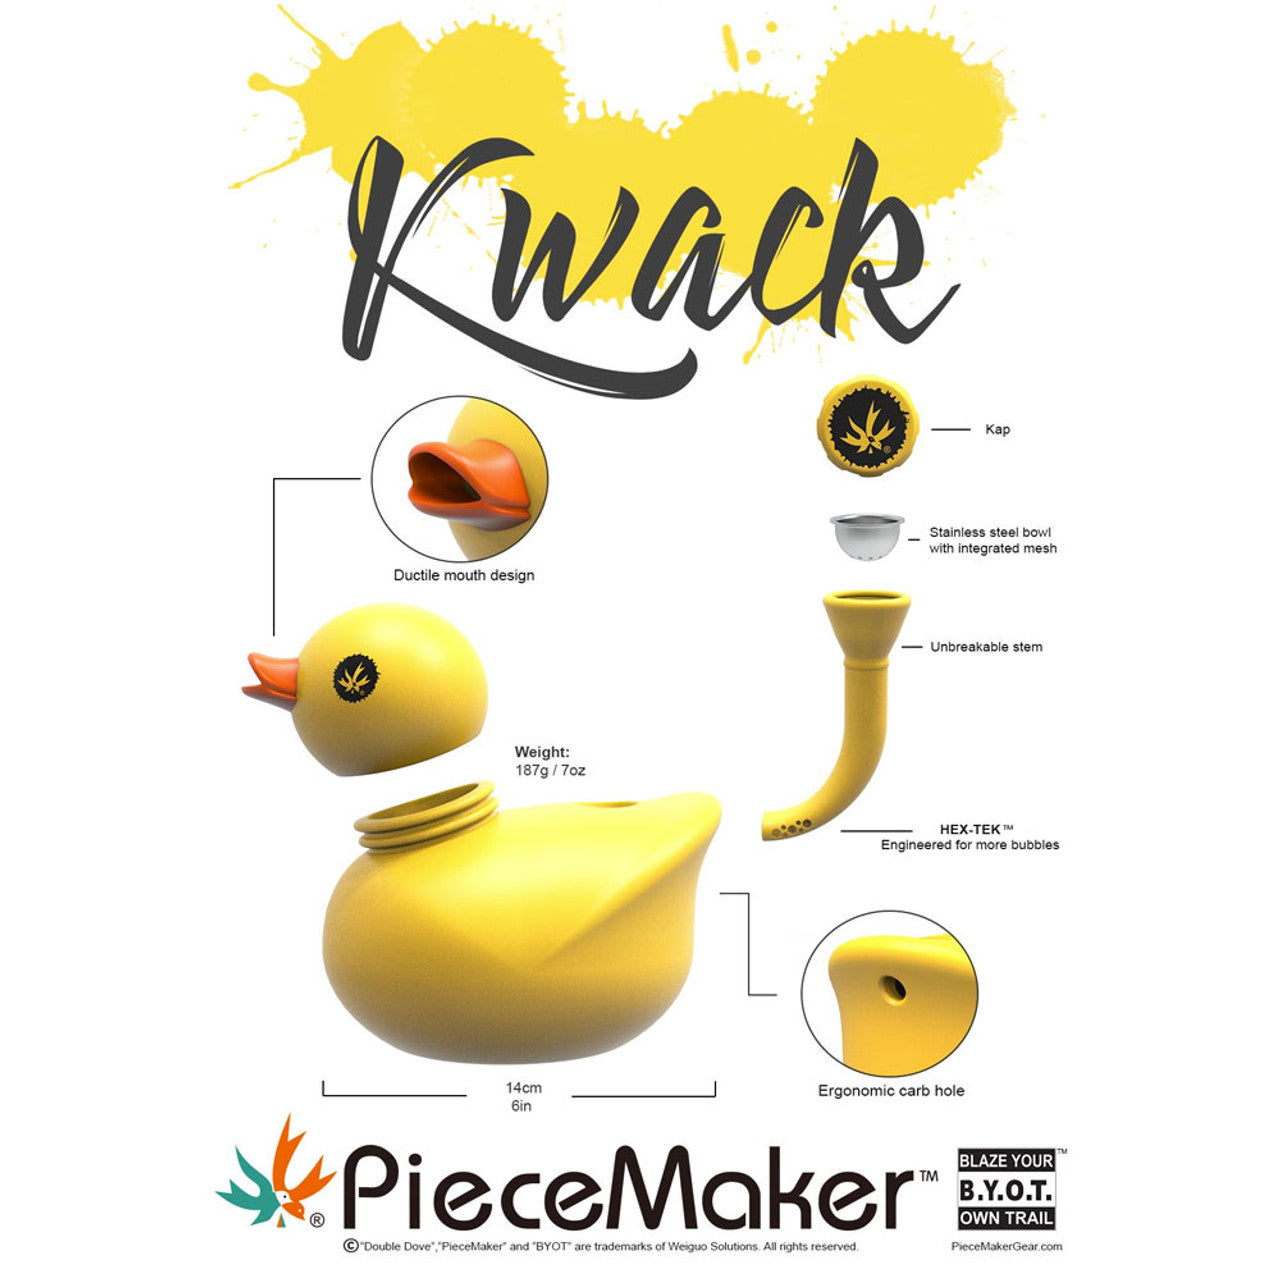 PieceMaker Kwack